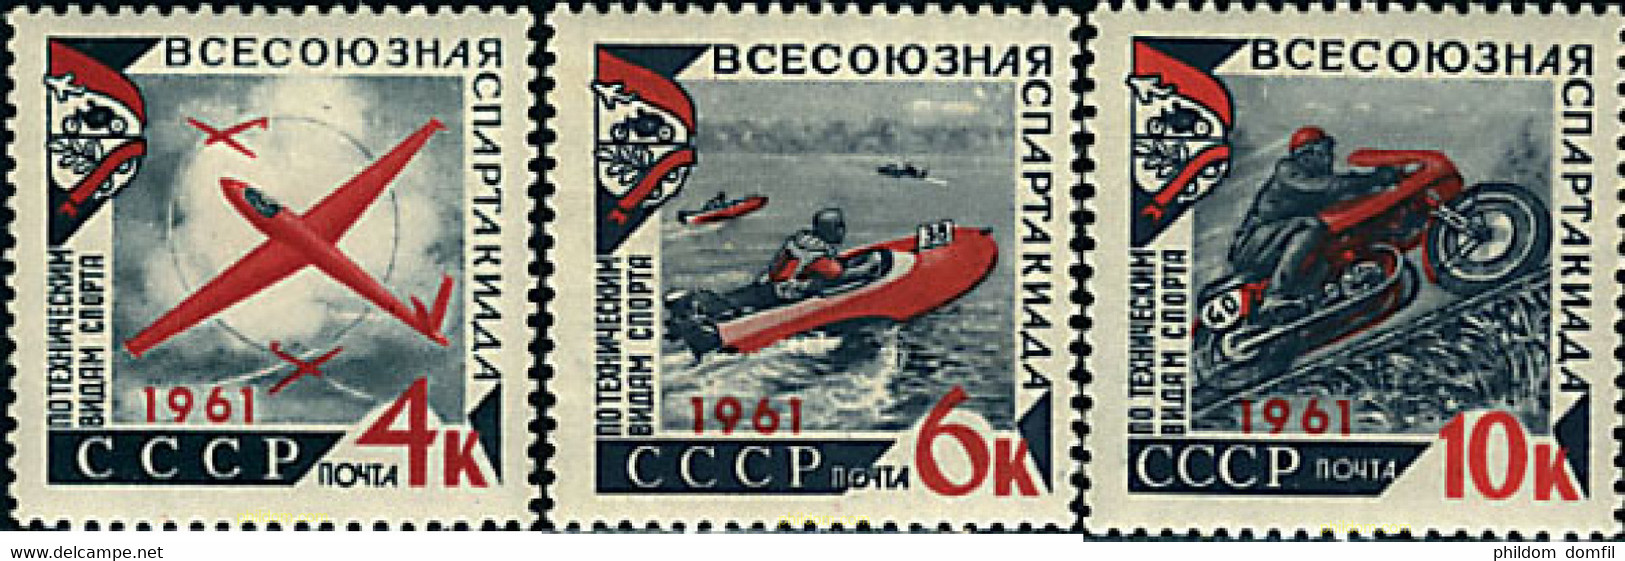 62993 MNH UNION SOVIETICA 1961 SPARTAKIADA SOVIETICA DE LOS DEPORTES TECNICOS - Collezioni